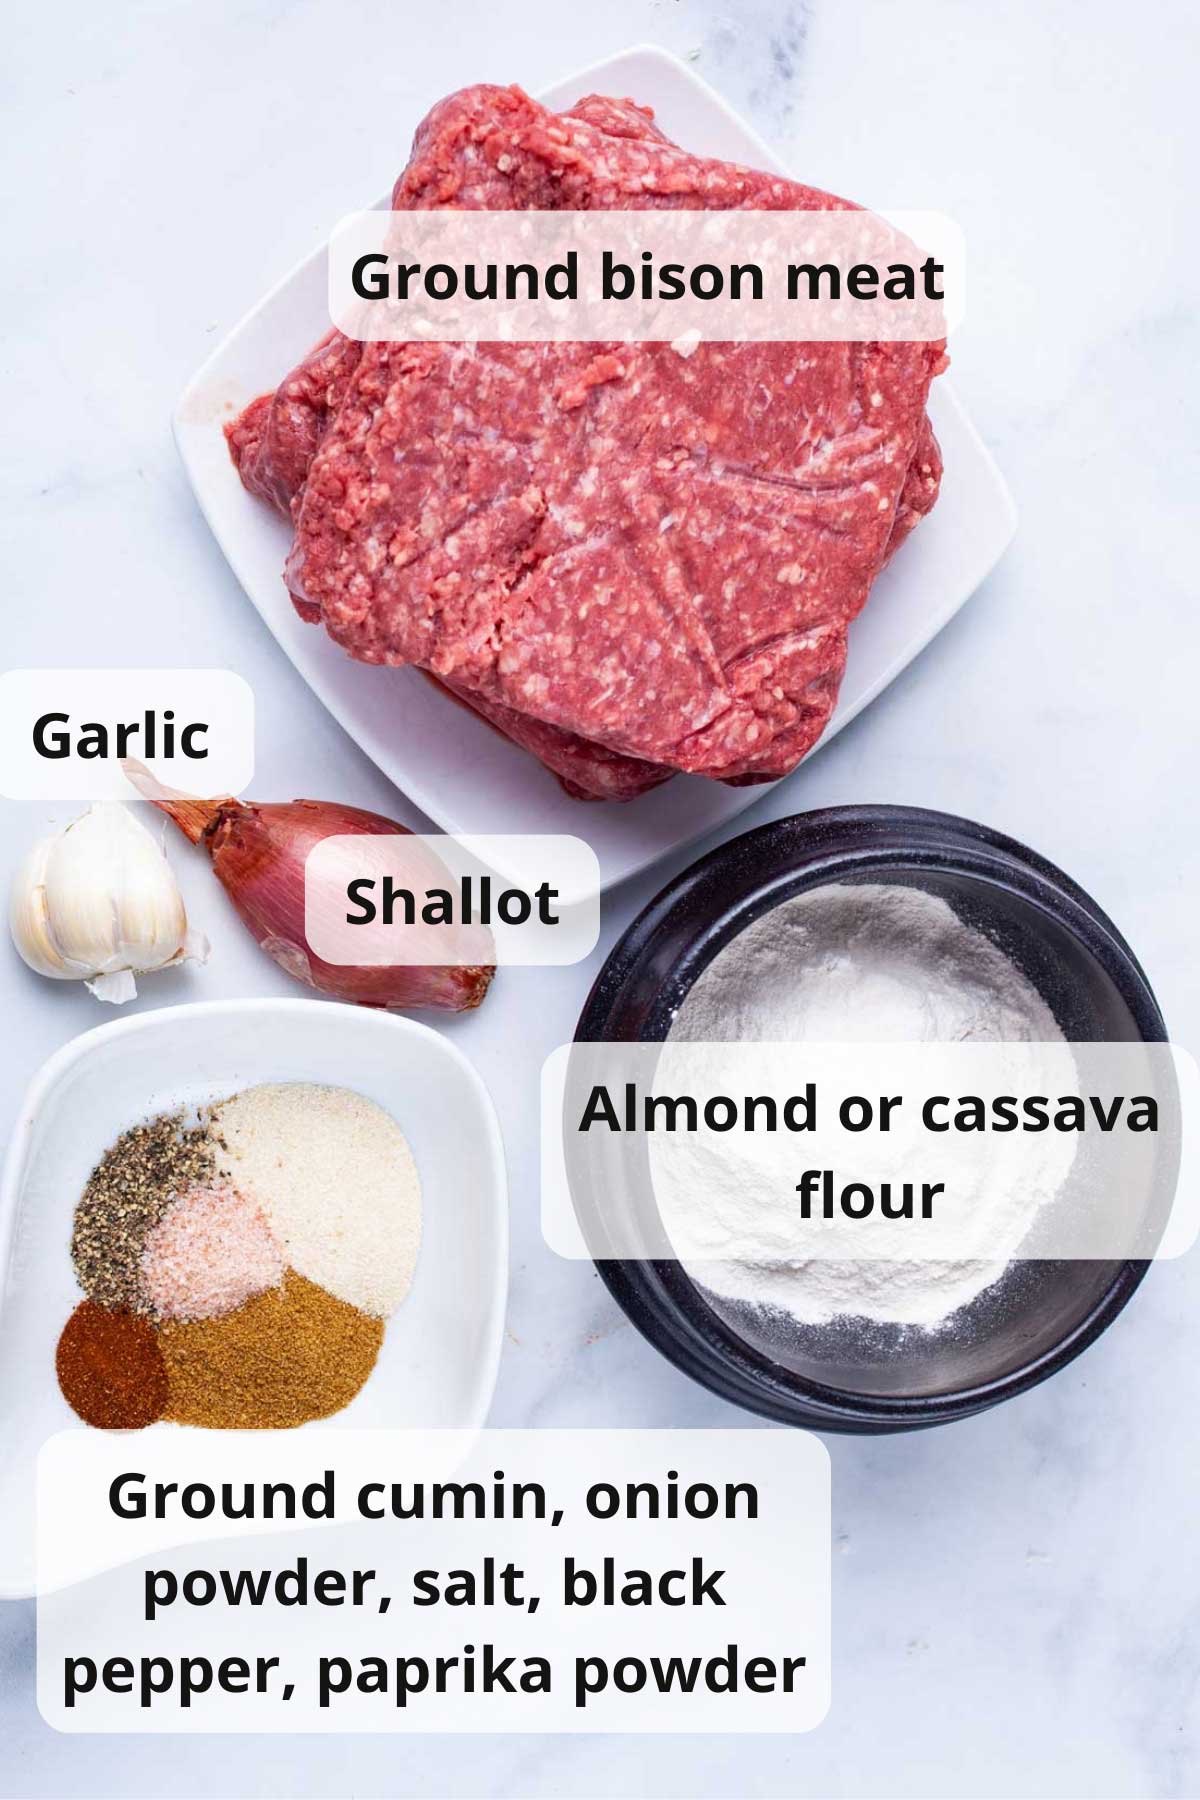 Ground bison meat, Cassava flour, ground cumin, onion powder, salt, pepper, paprika powder, shallot, and garlic displayed on a table.